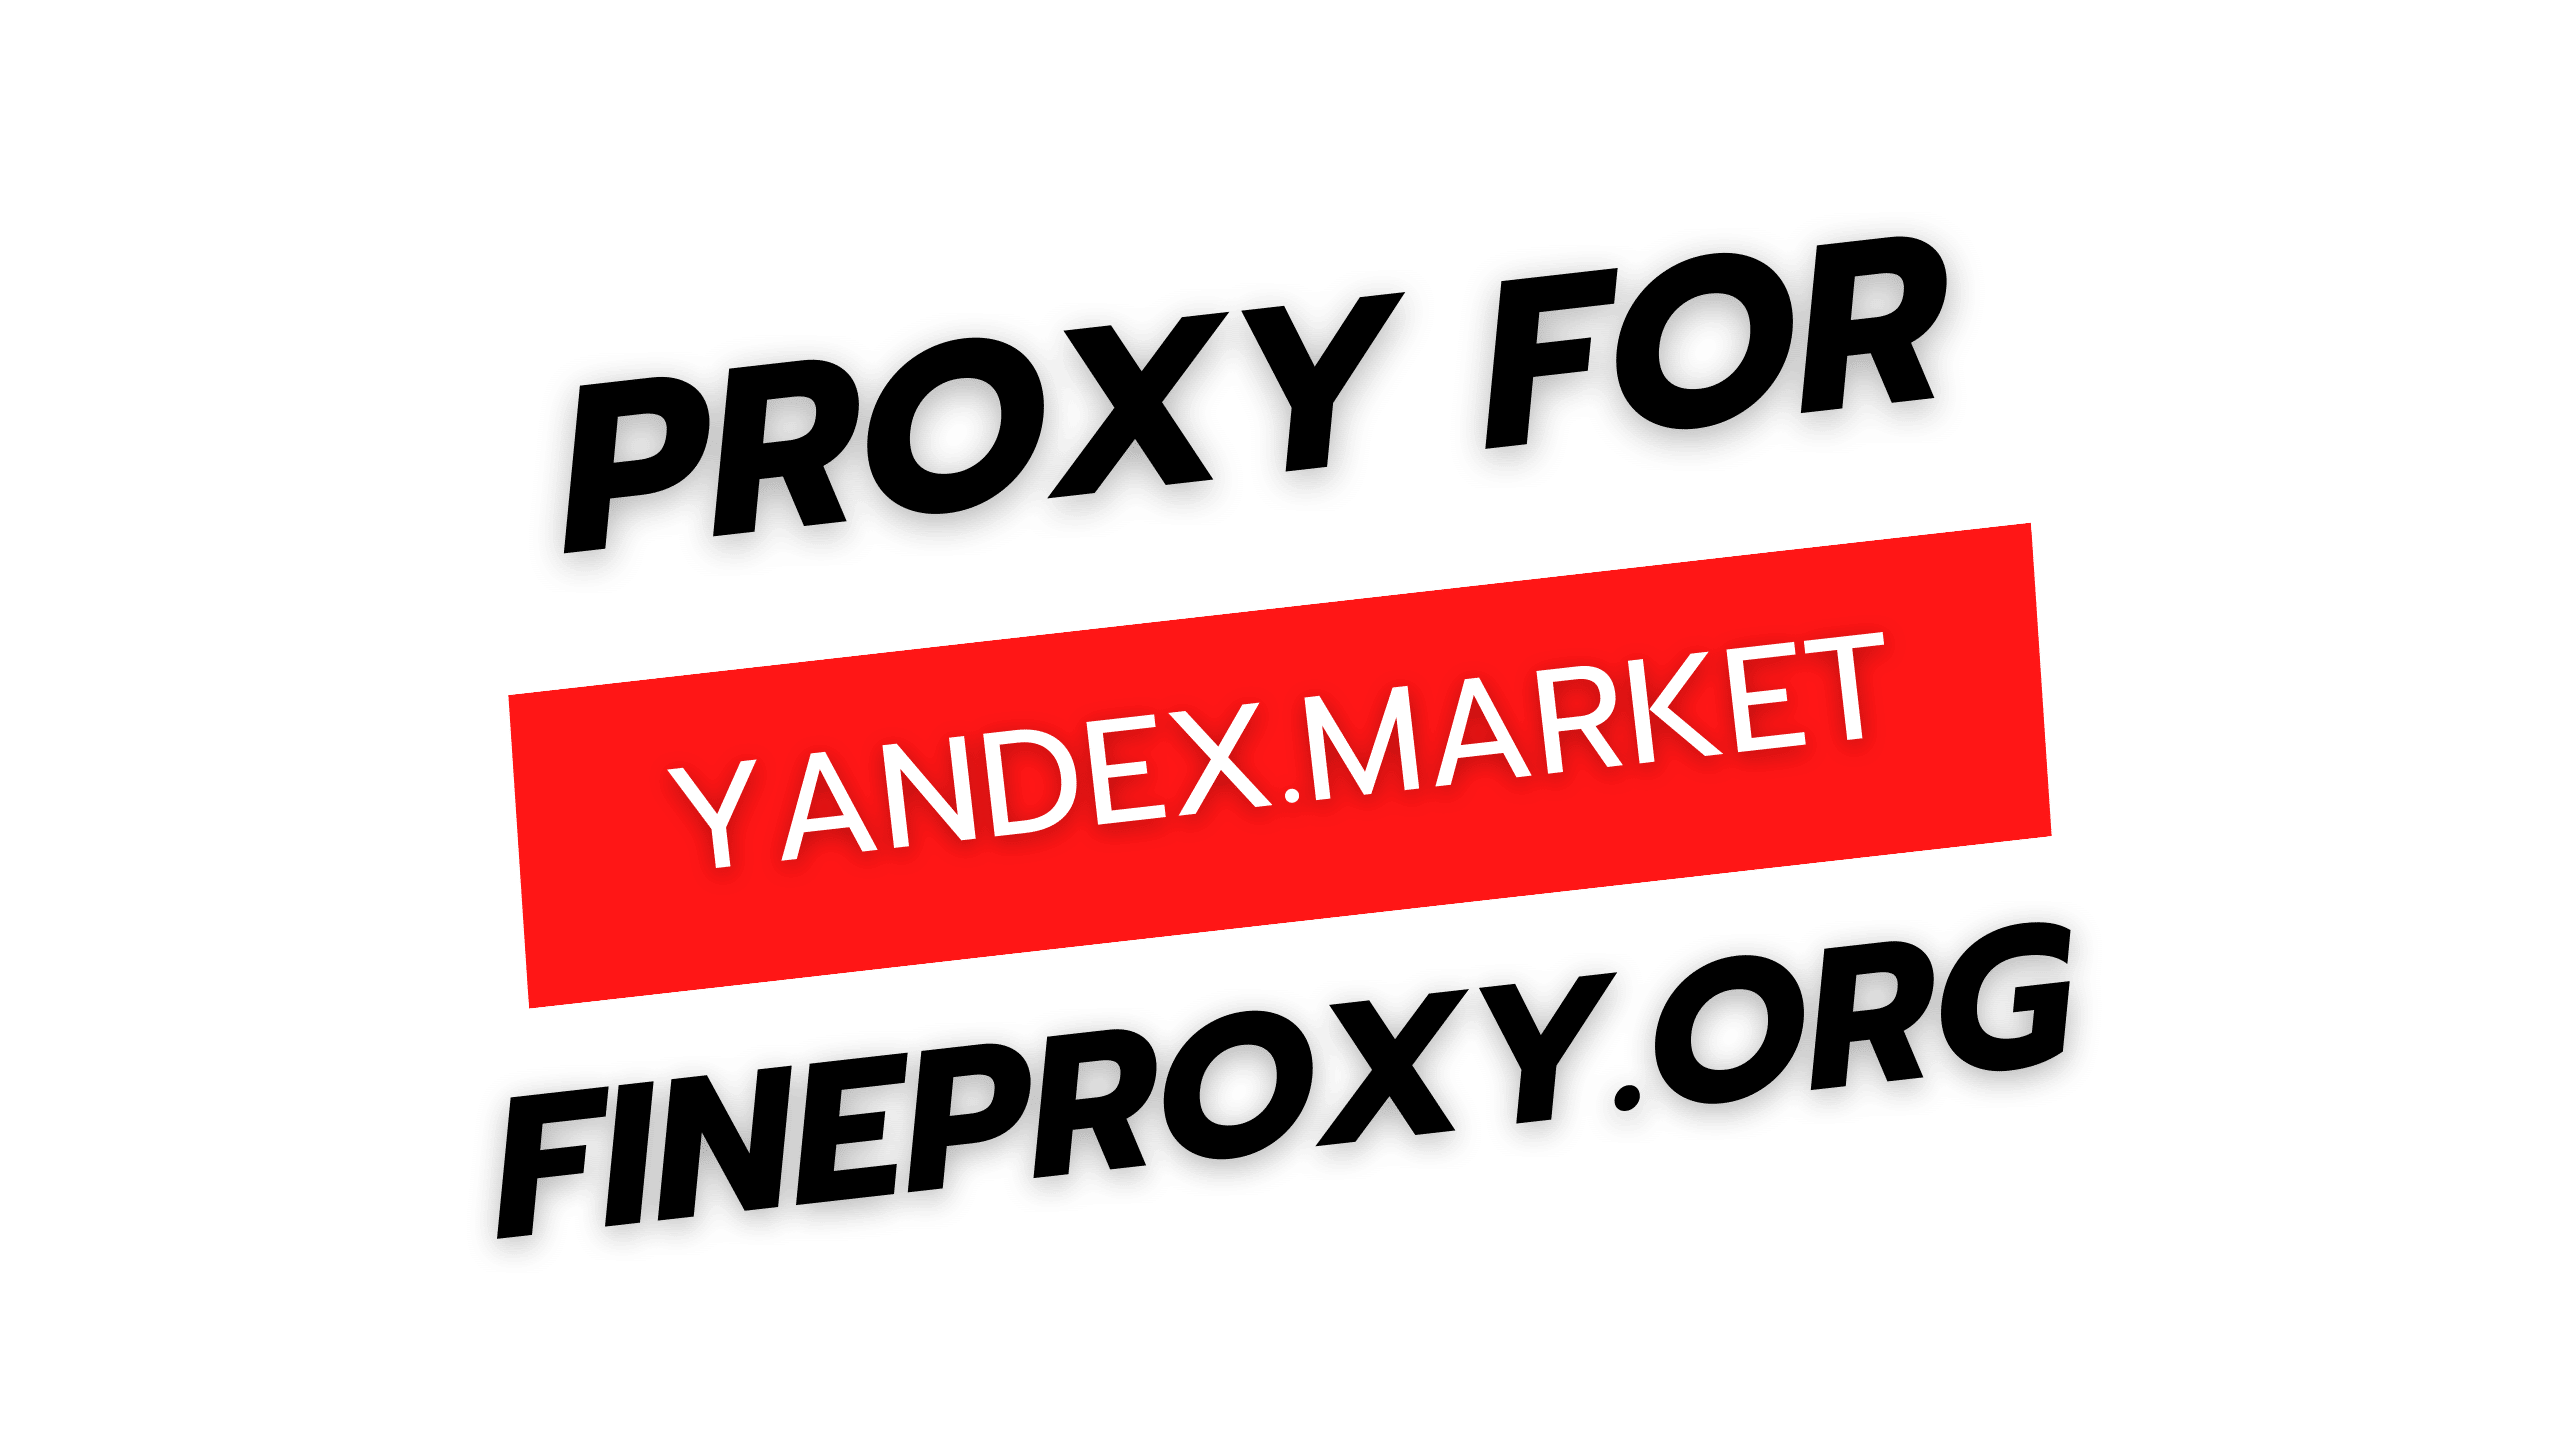 Yandex. Market